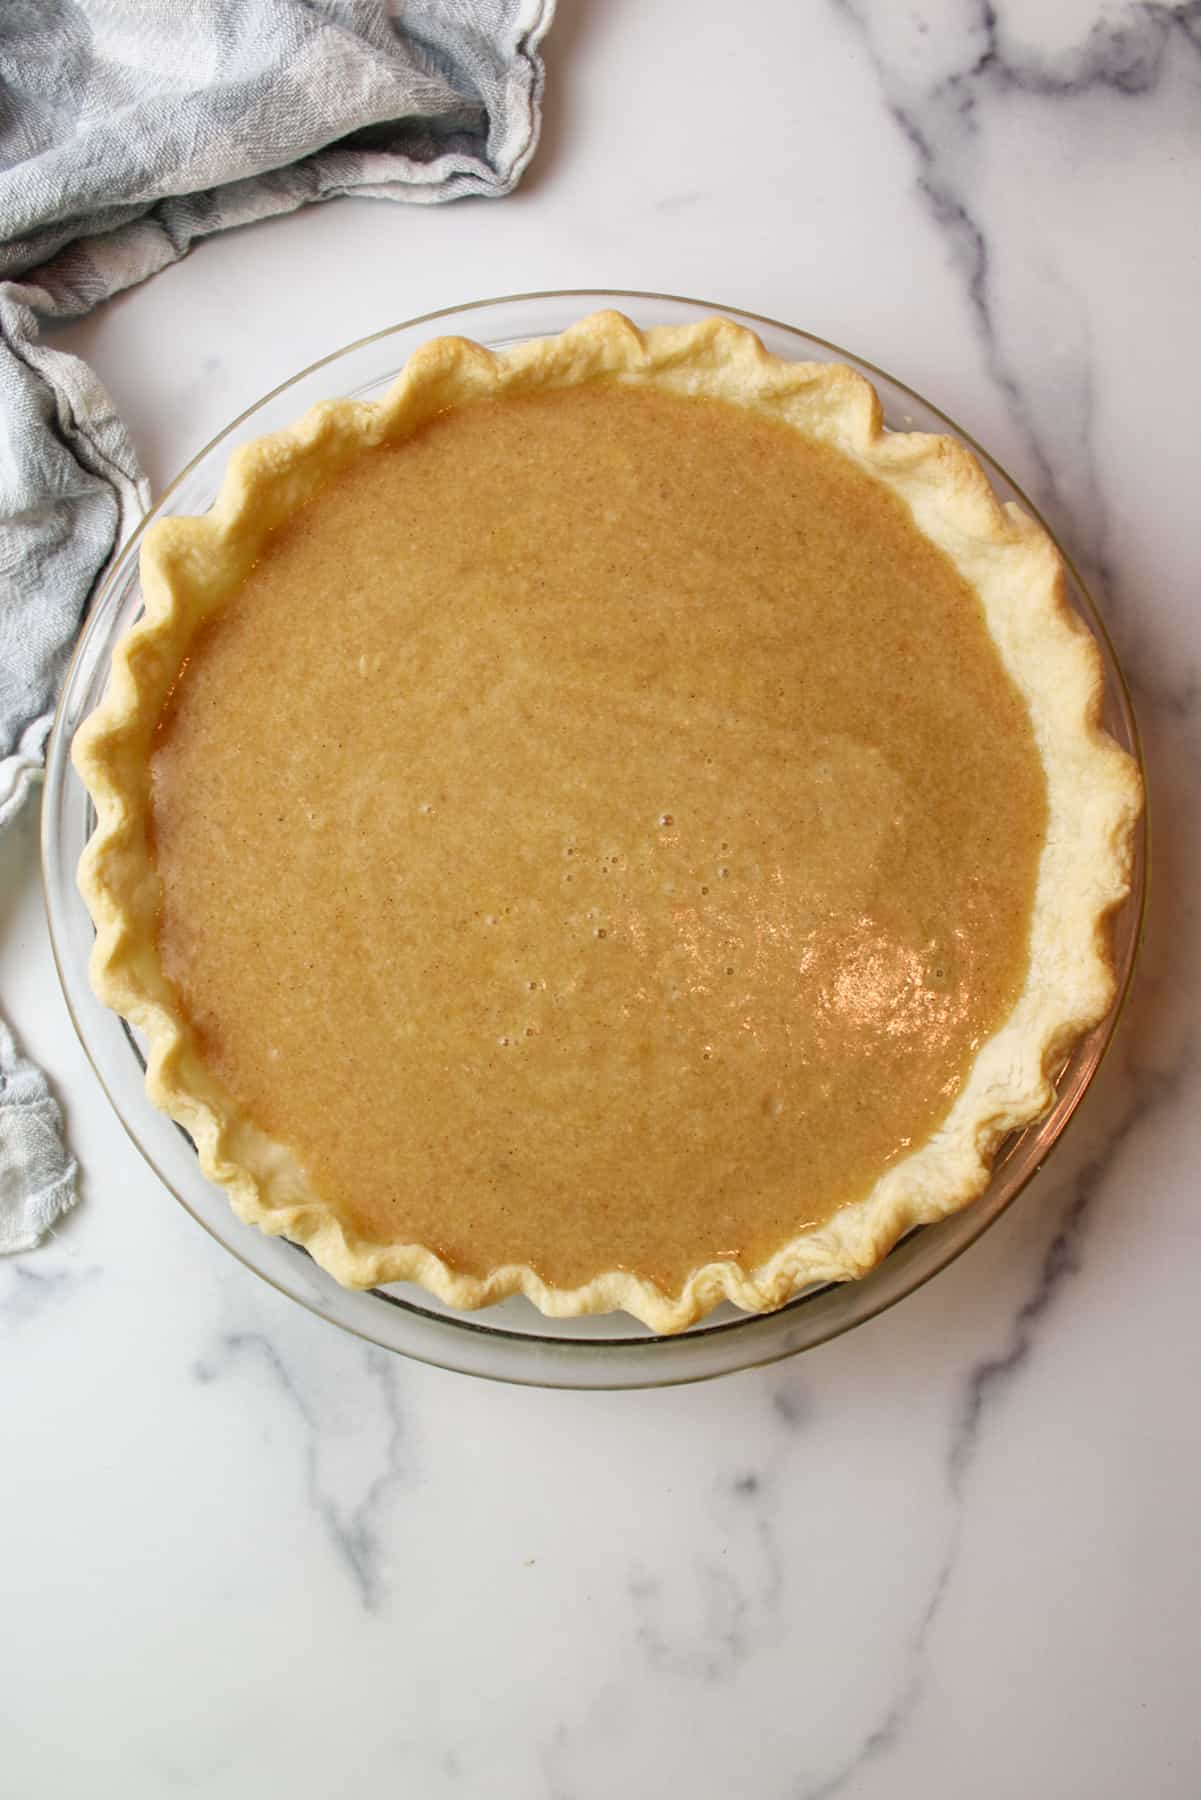 applesauce custard pie filling in a prebaked pie crust